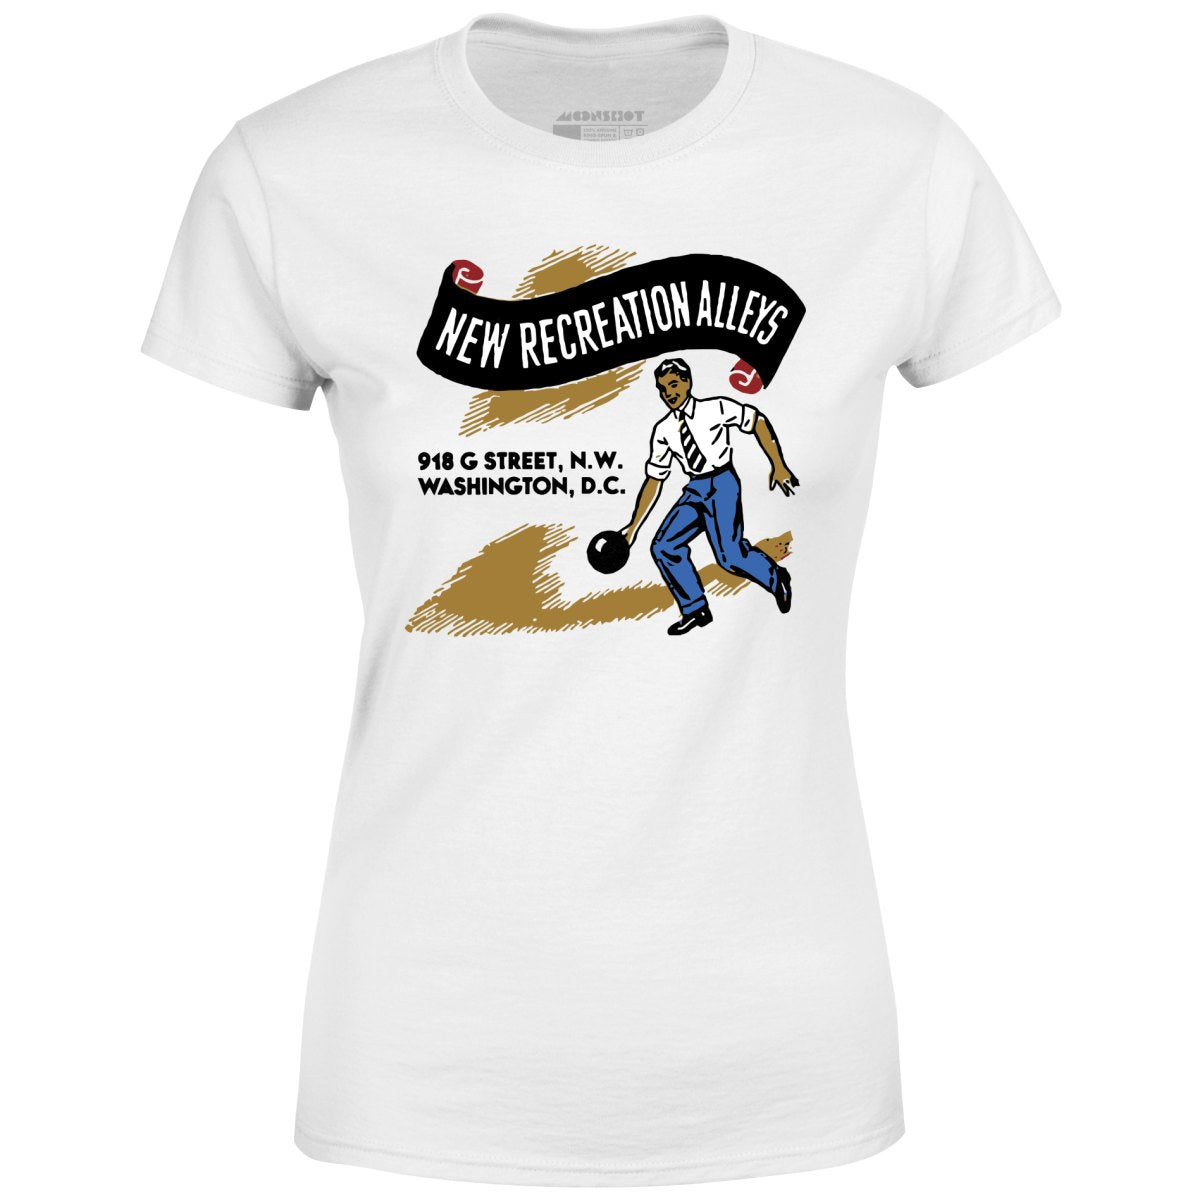 New Recreation Alleys - Washington D.C. - Vintage Bowling Alley - Women's T-Shirt